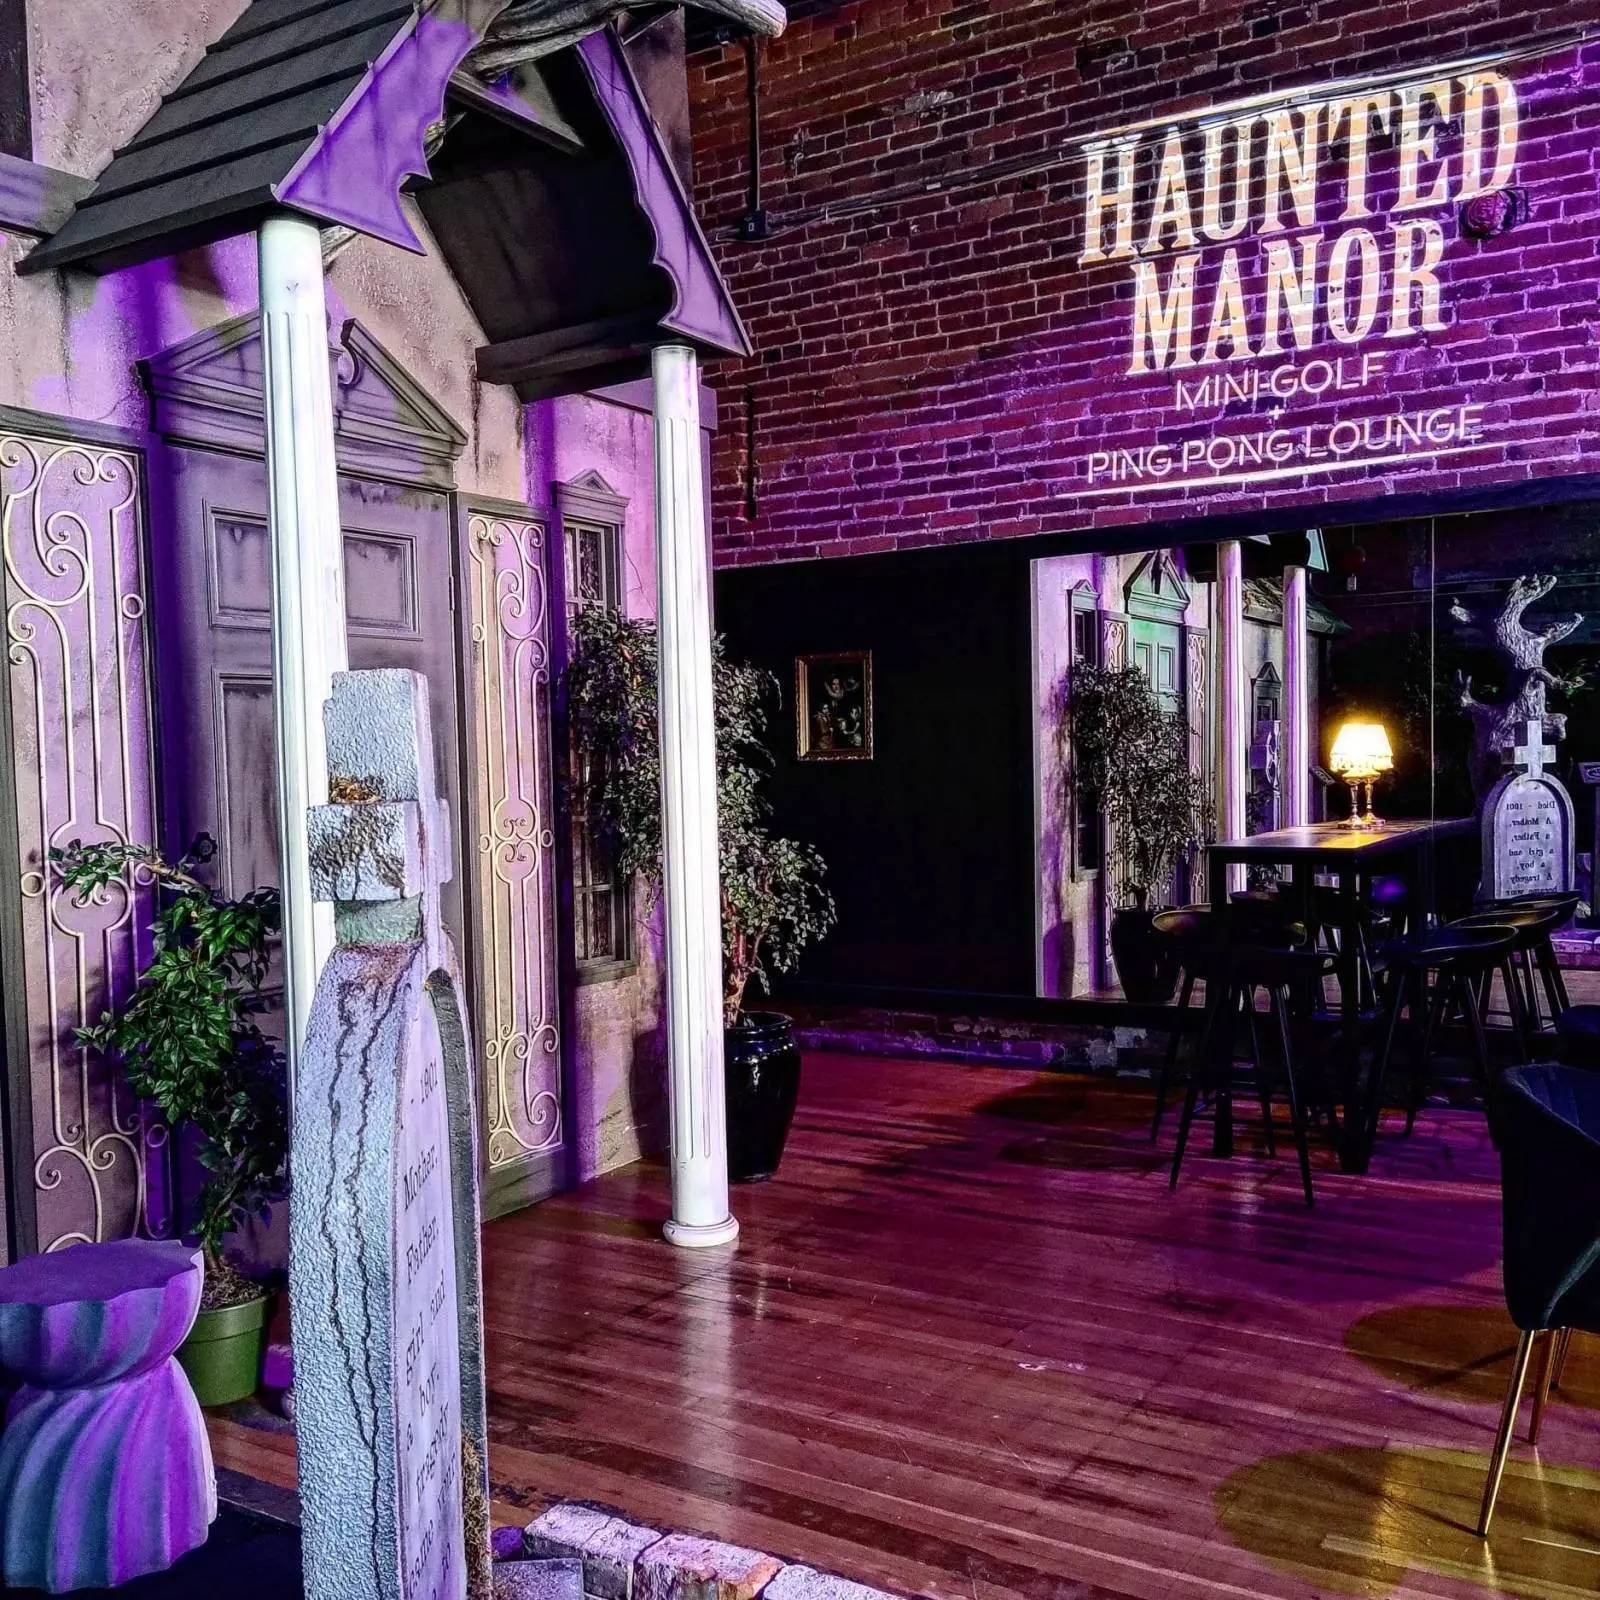 Haunted Manor Victoria minigolf experience